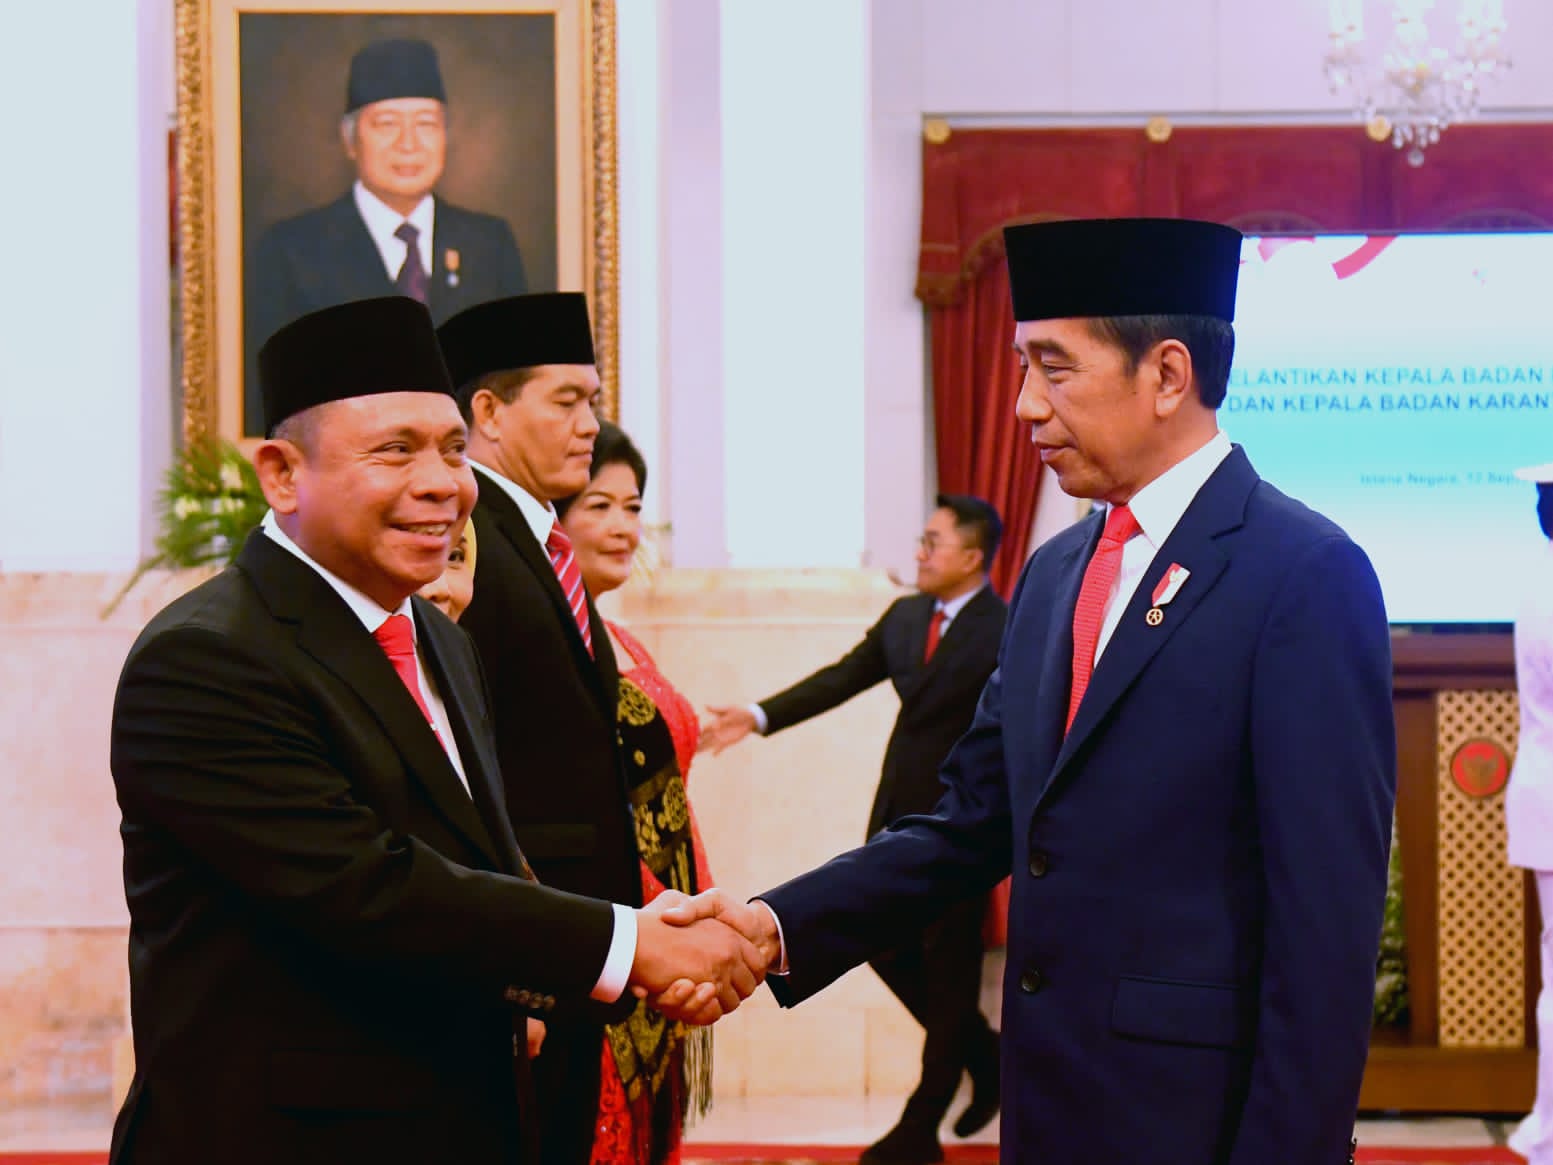 Laksdya Irvansyah, Putra Bengkulu yang Ditunjuk Jokowi Menjaga Keamanan Laut Indonesia